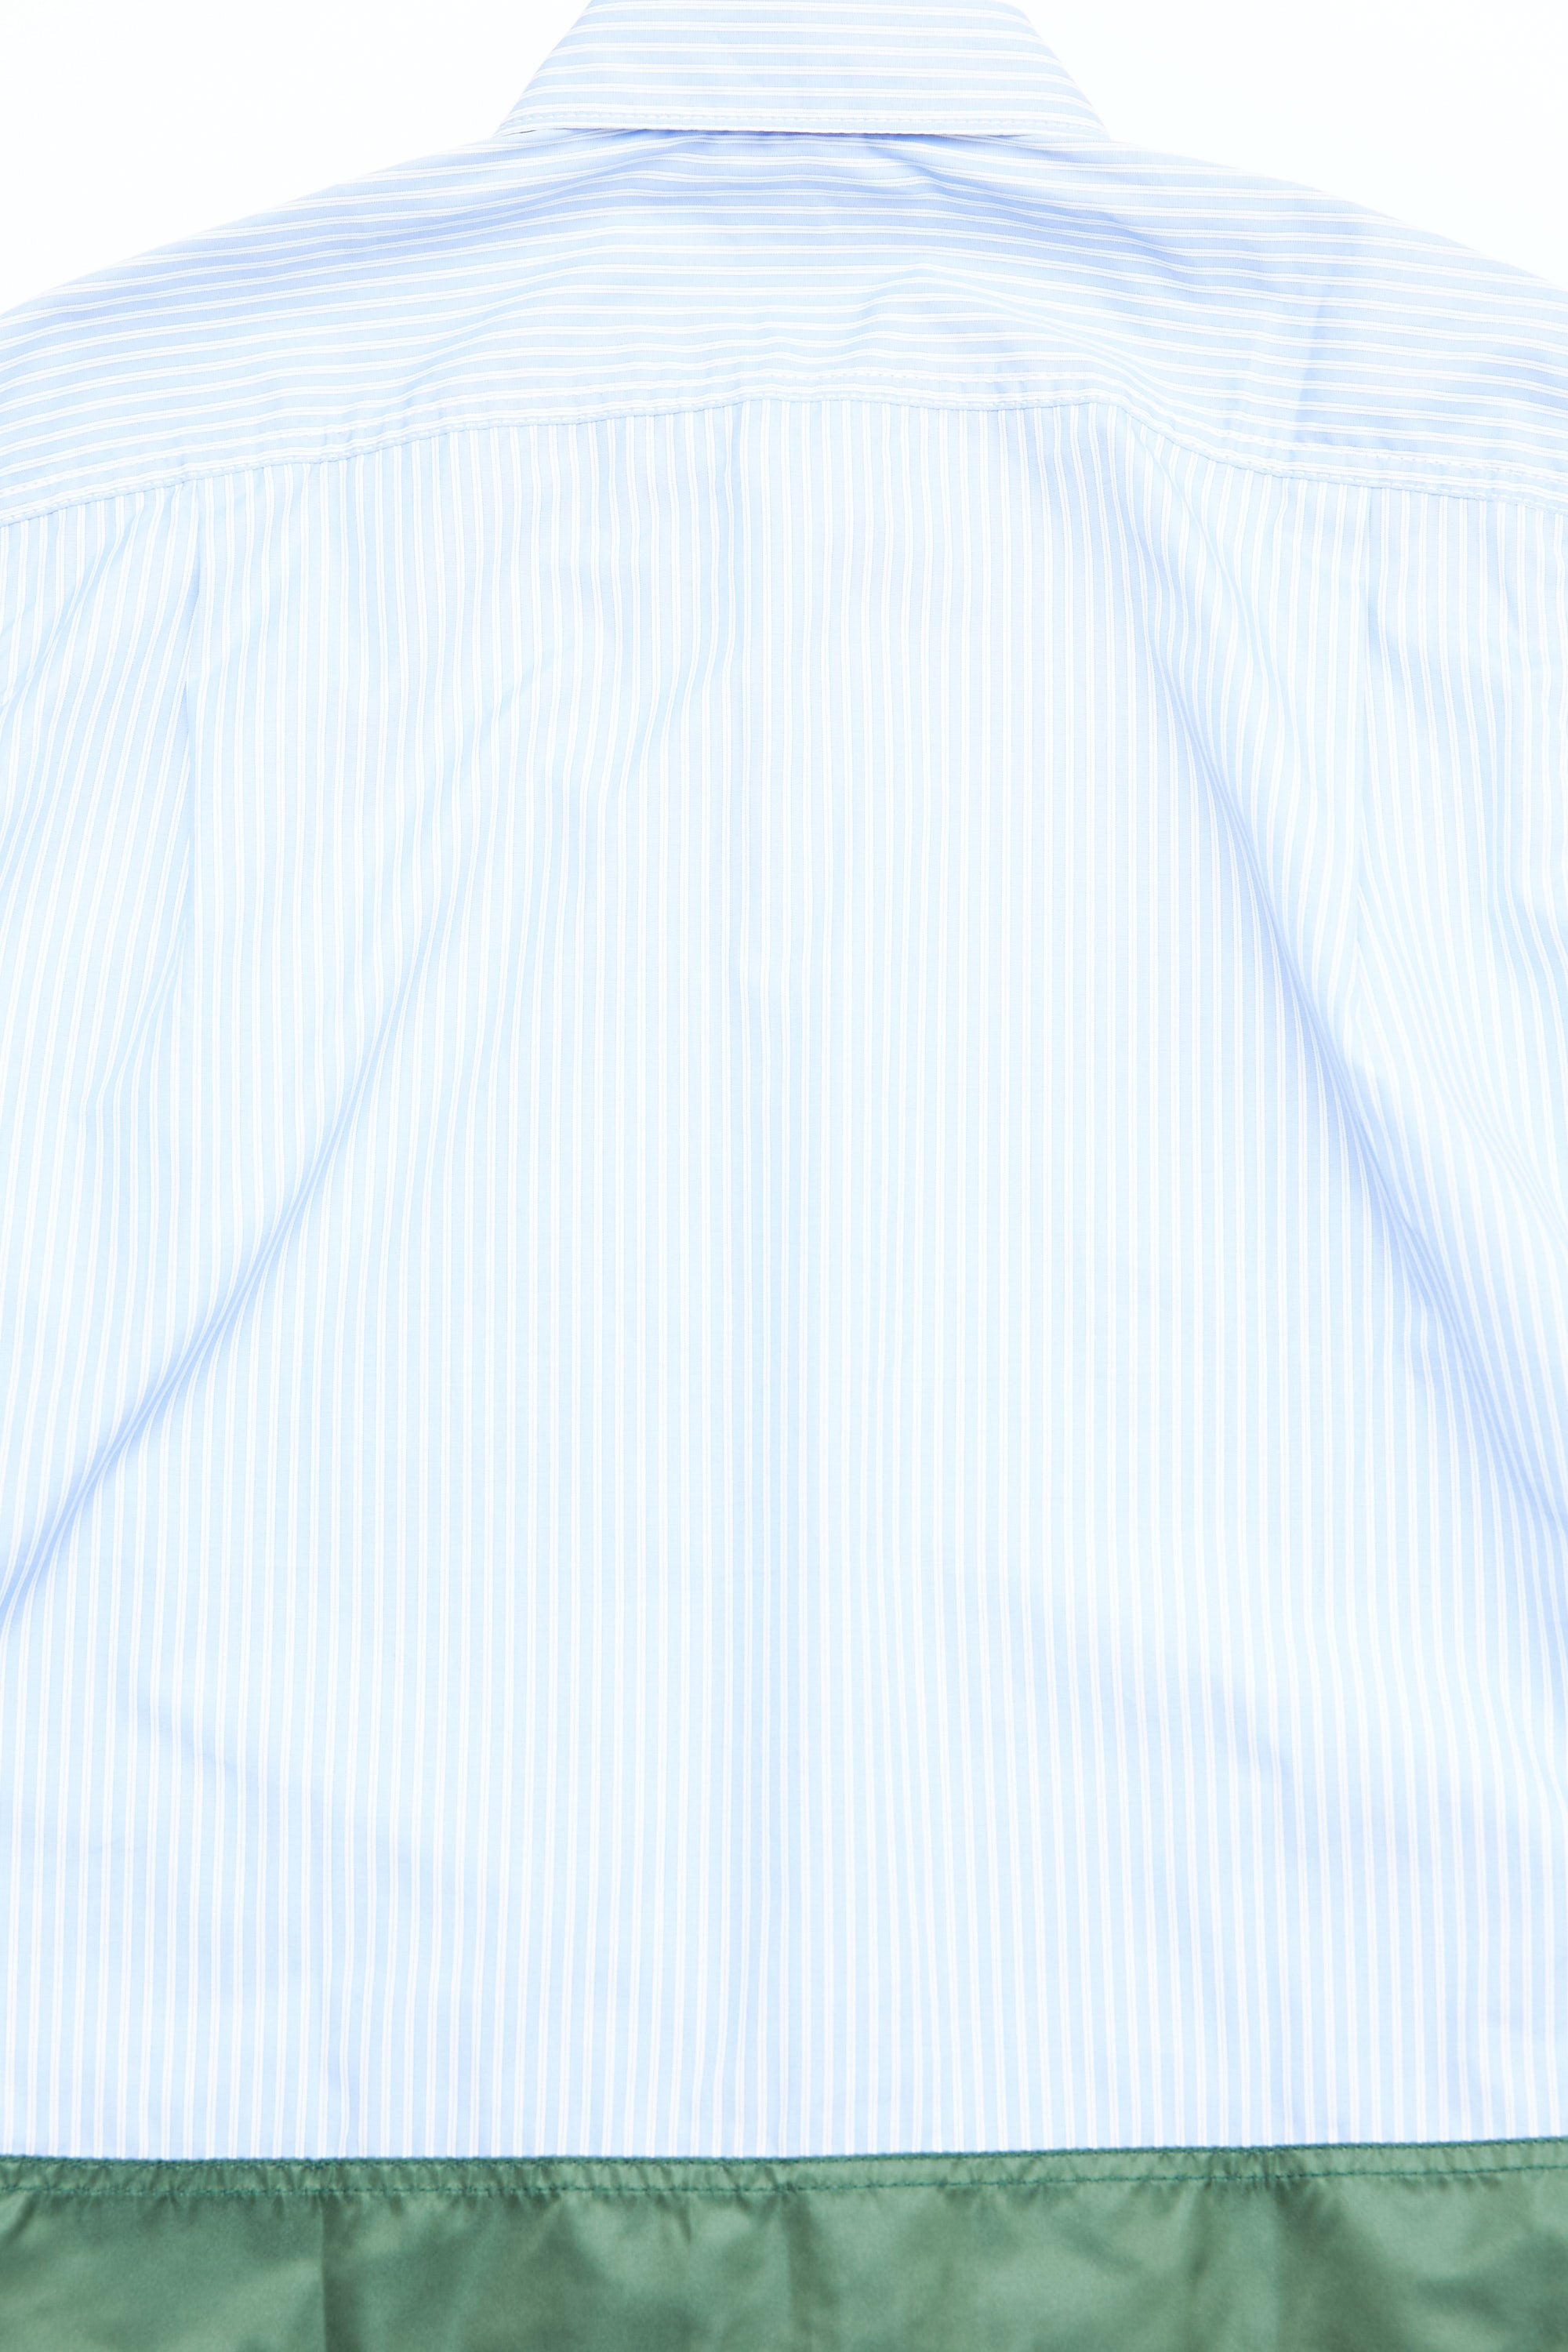 Comme des Garçons HOMME Cotton Stripe x Nylon Twill Shirt - Sax/White x Mix